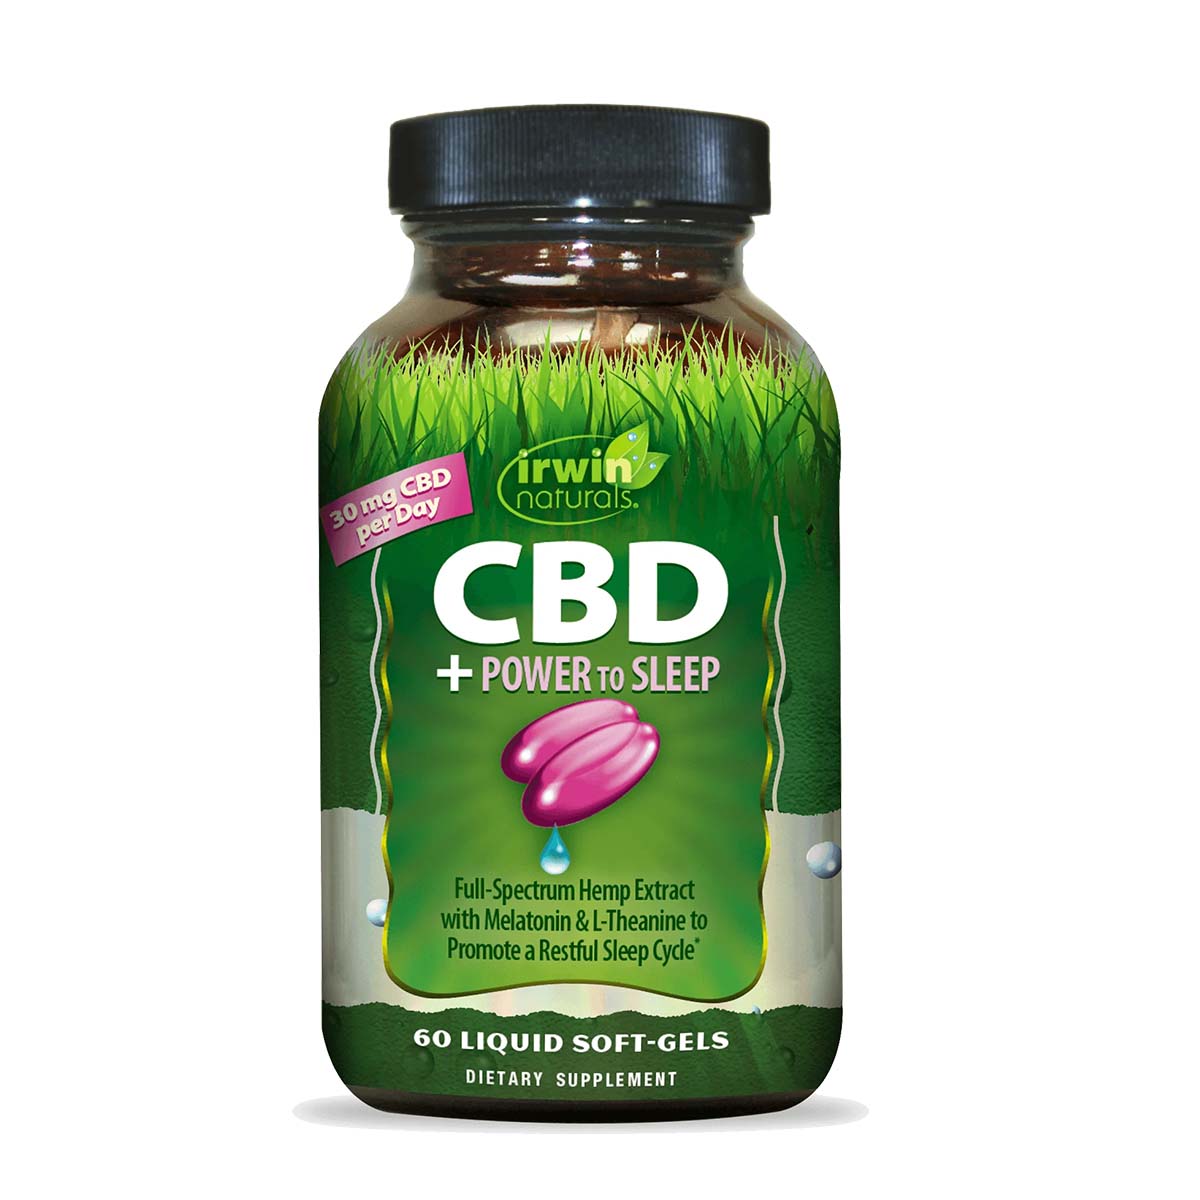 Container of Irwin Naturals CBD supplements